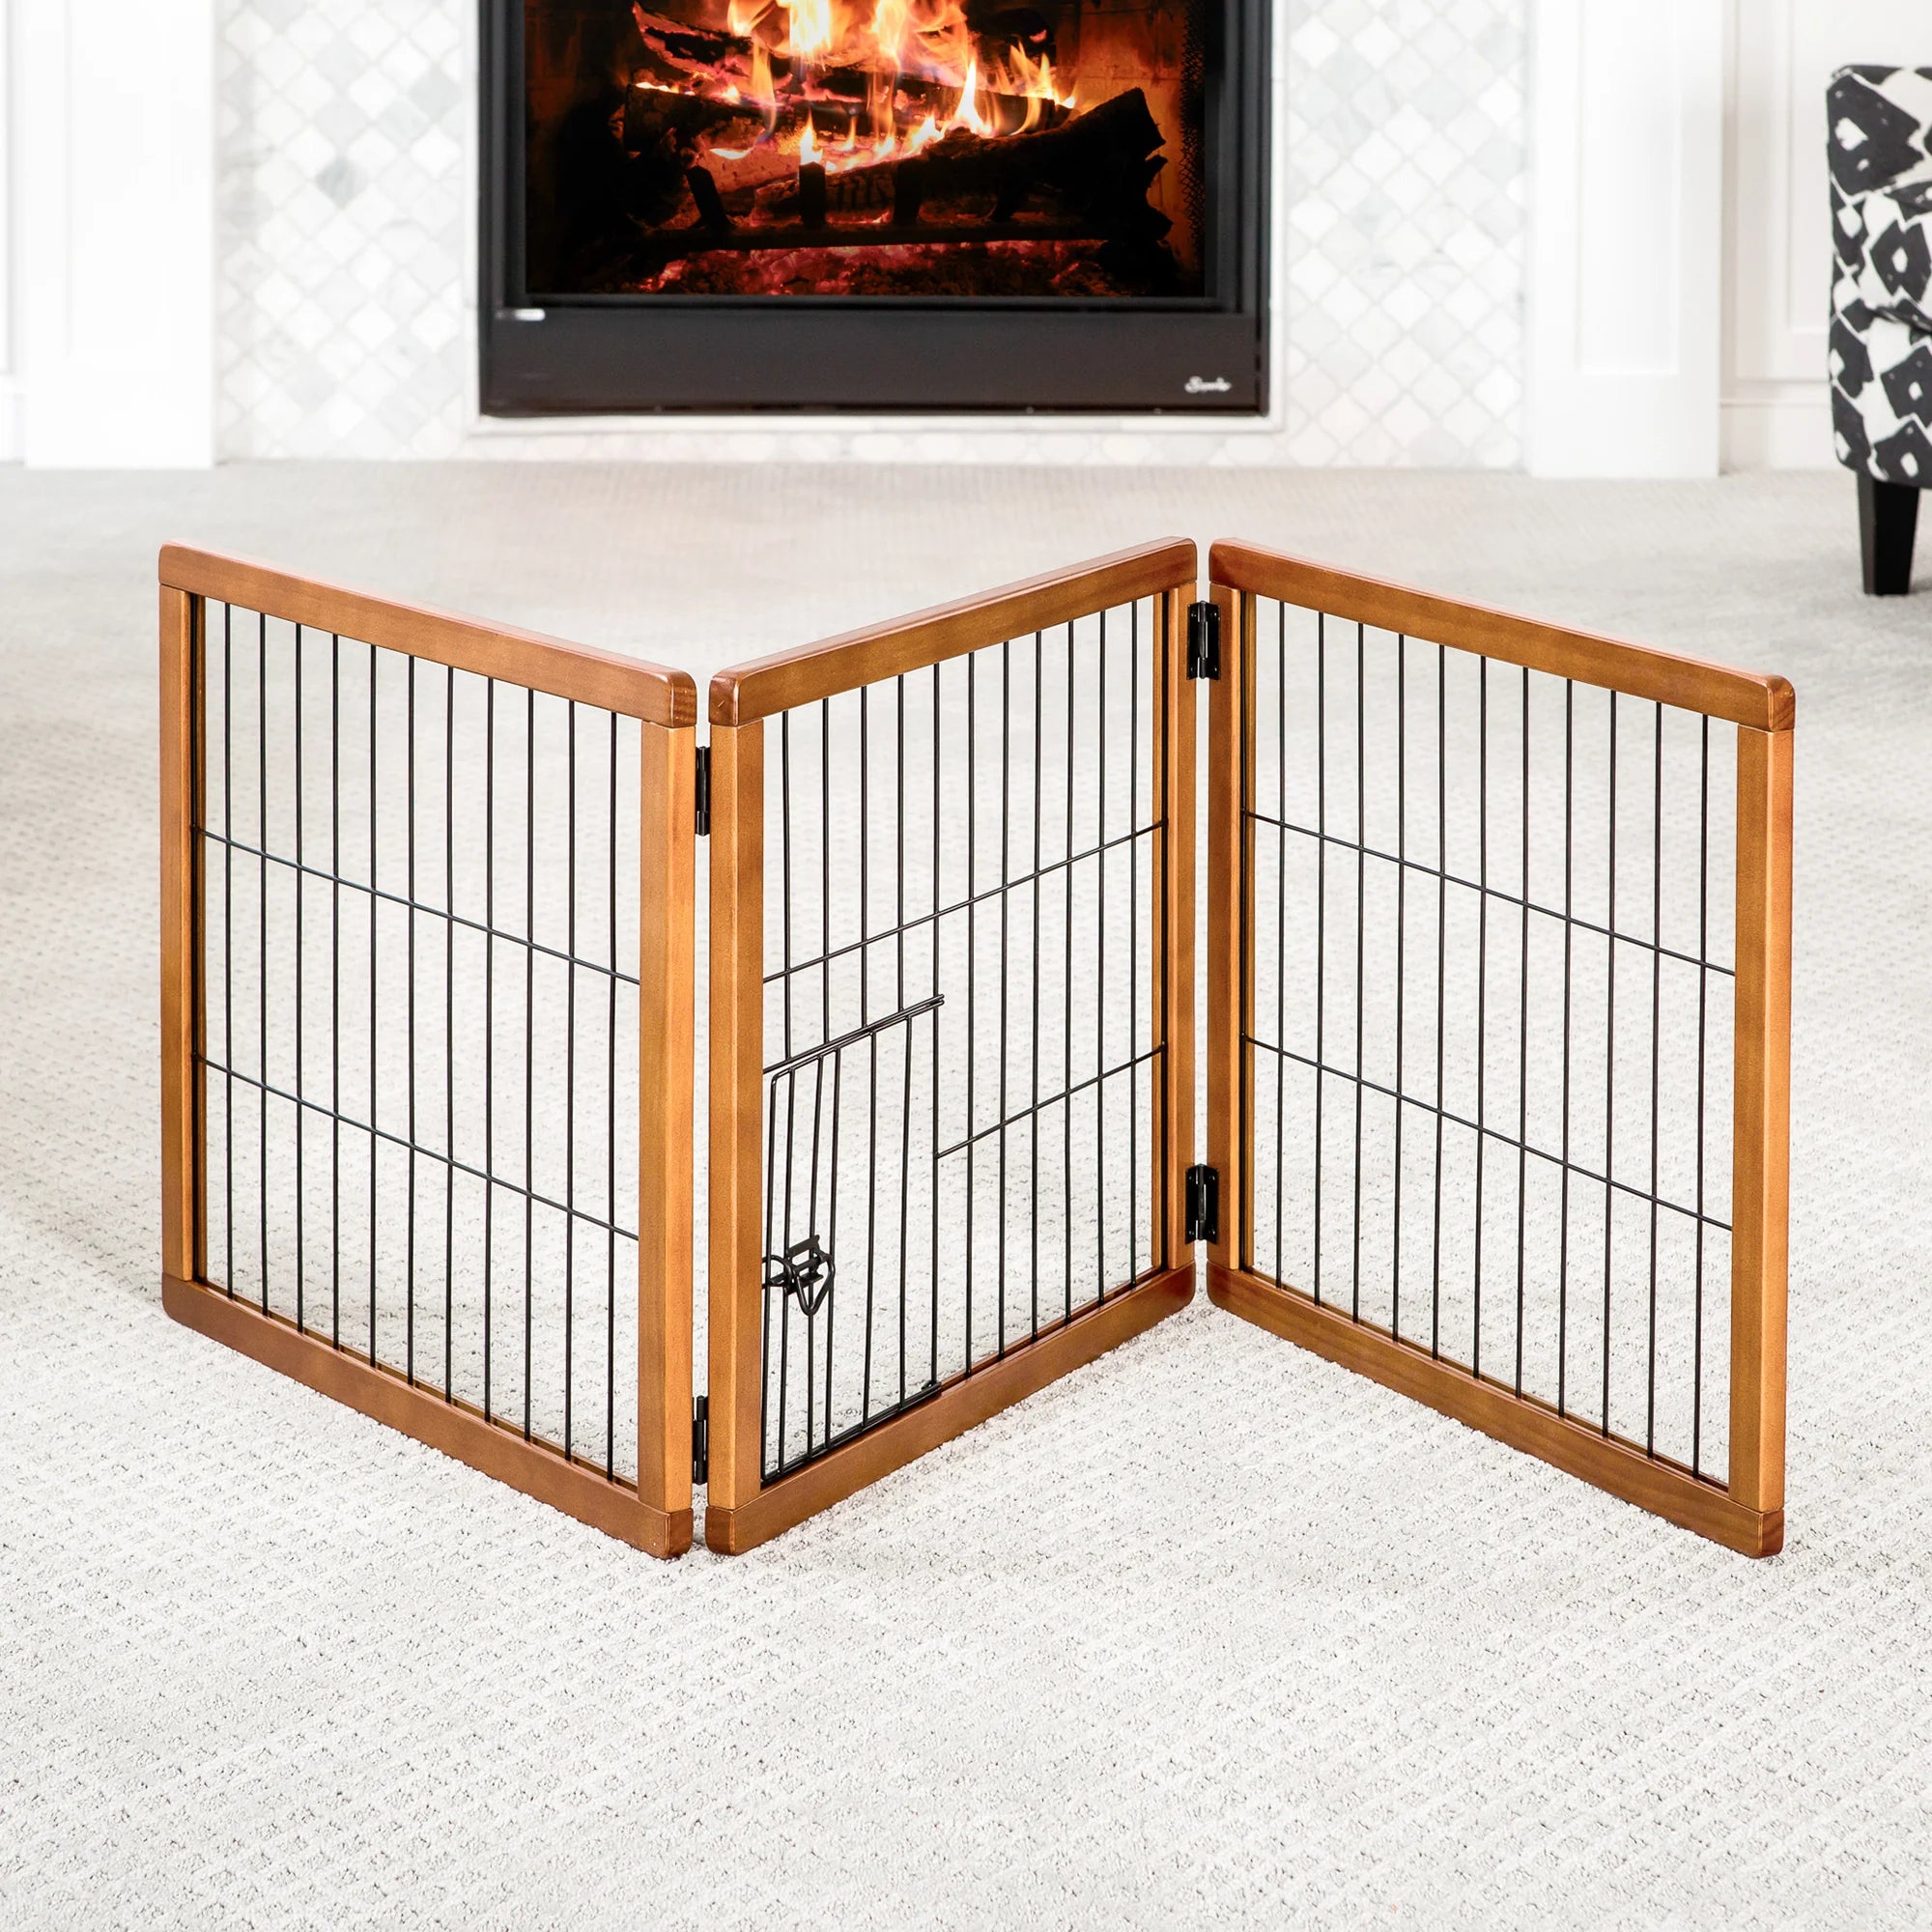 Design Paw 3 Panel Wooden Pet Gate set up in living room.